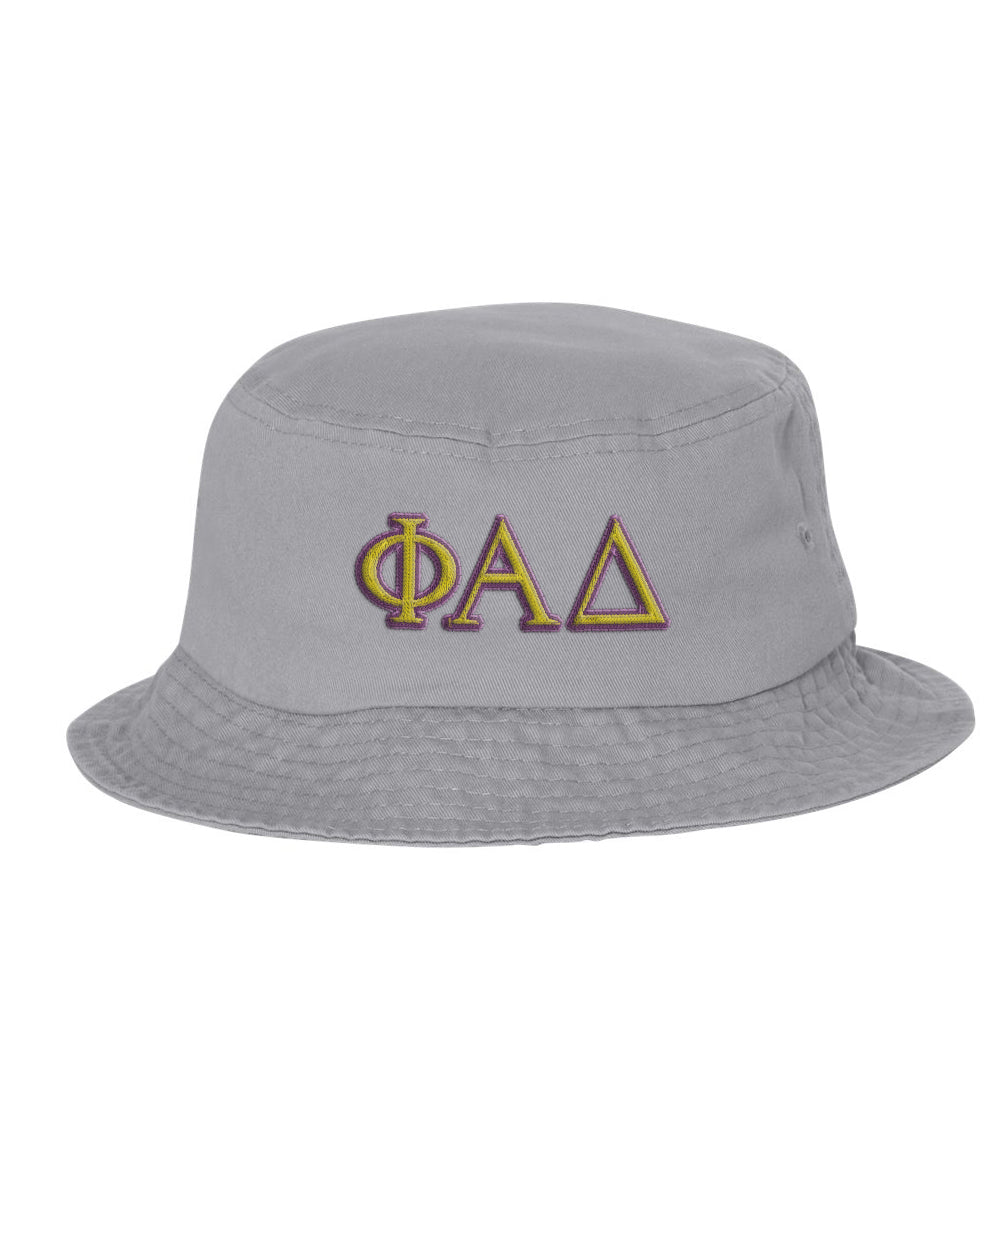 Phi Alpha Delta Embroidered Bucket Hat